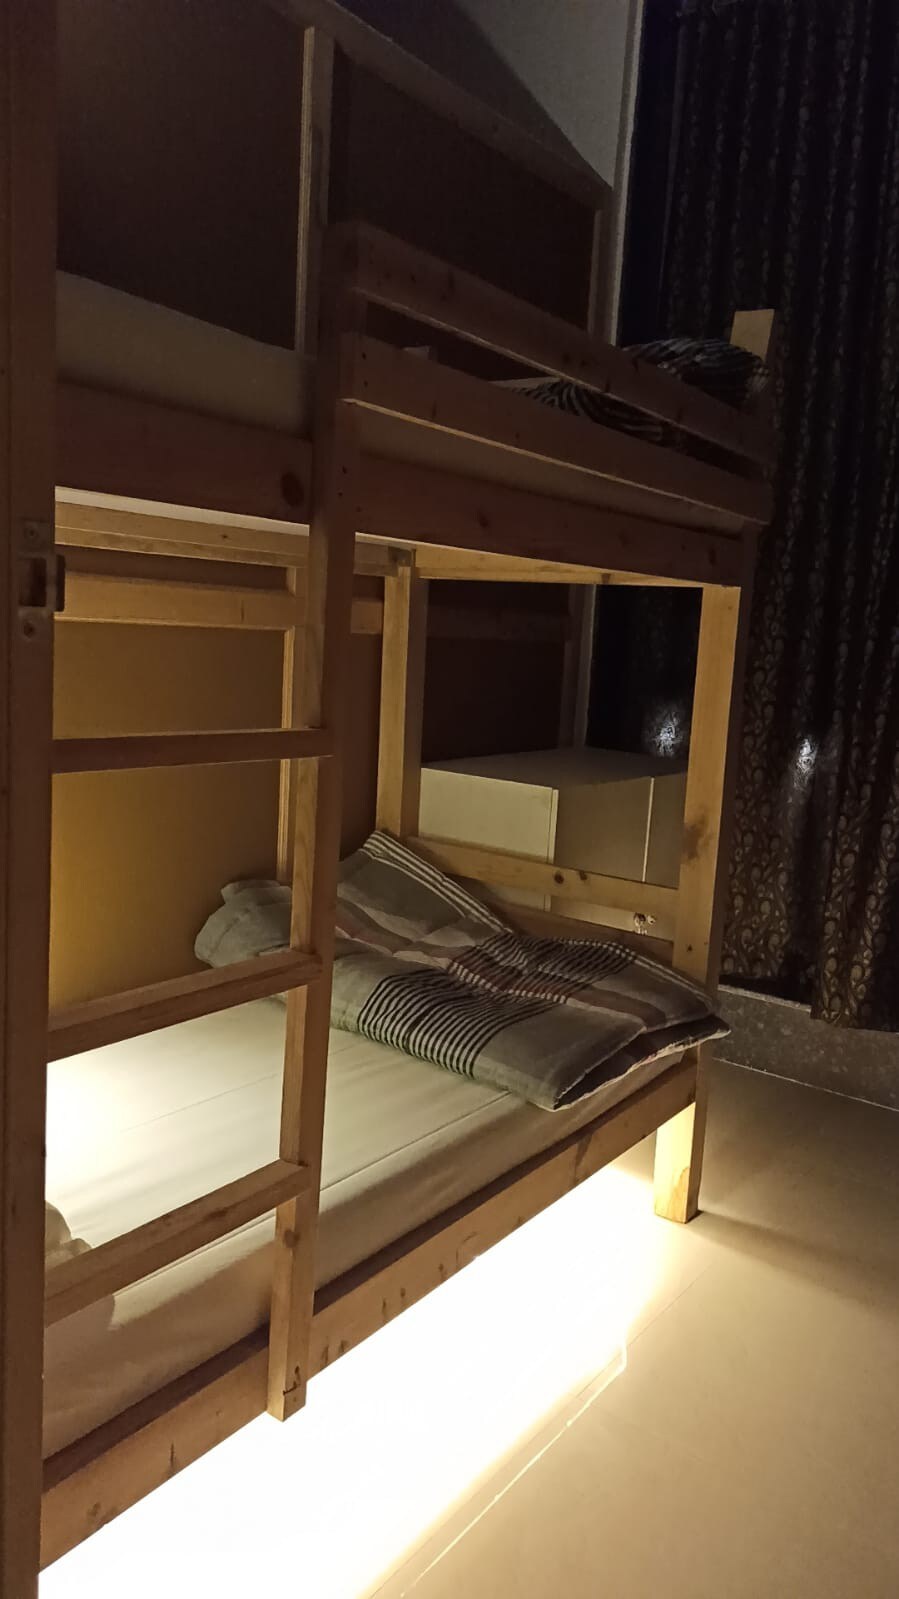 2 bed cabin dorm